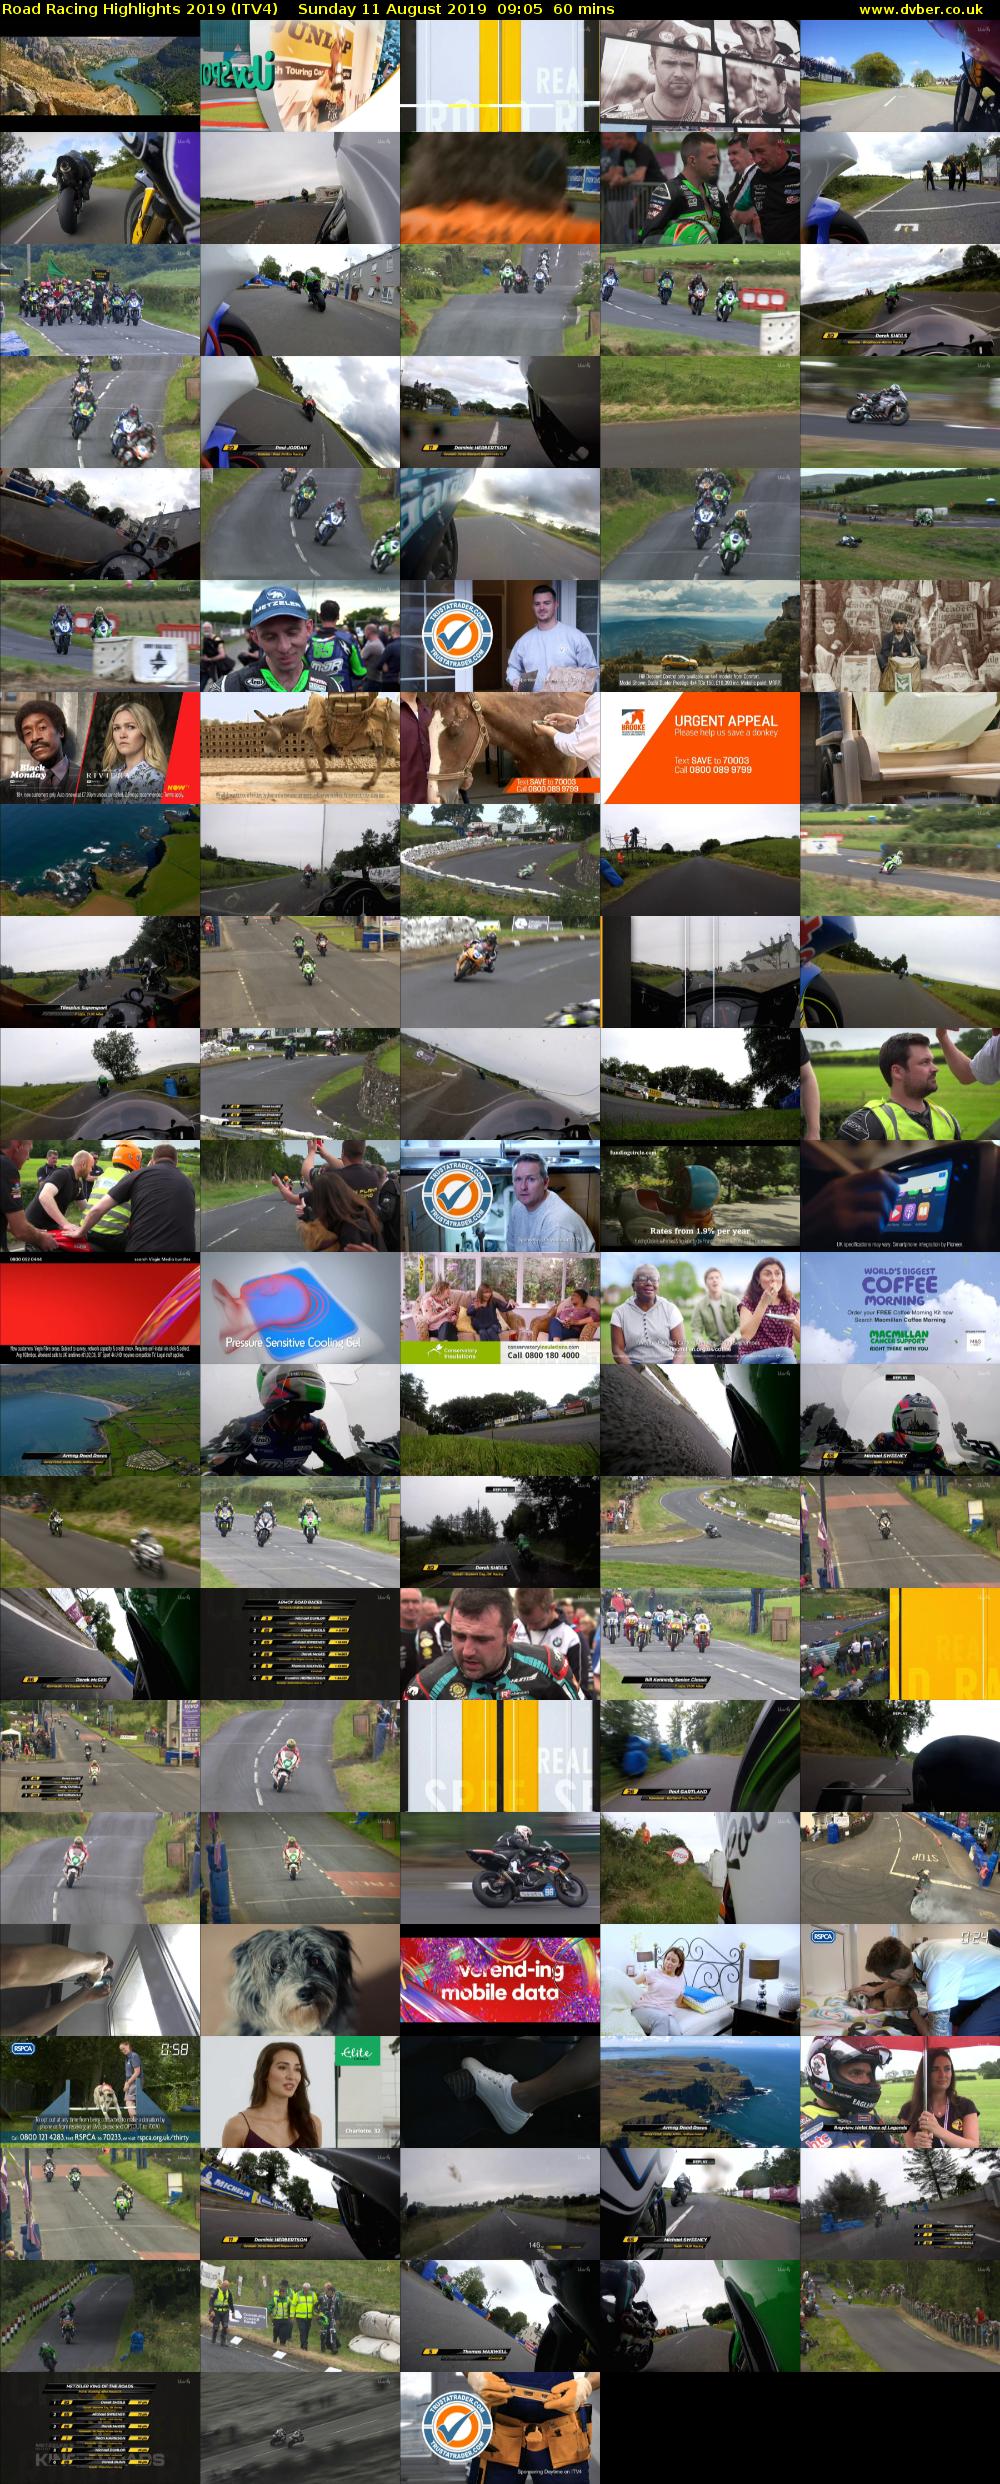 Road Racing Highlights 2019 (ITV4) Sunday 11 August 2019 09:05 - 10:05